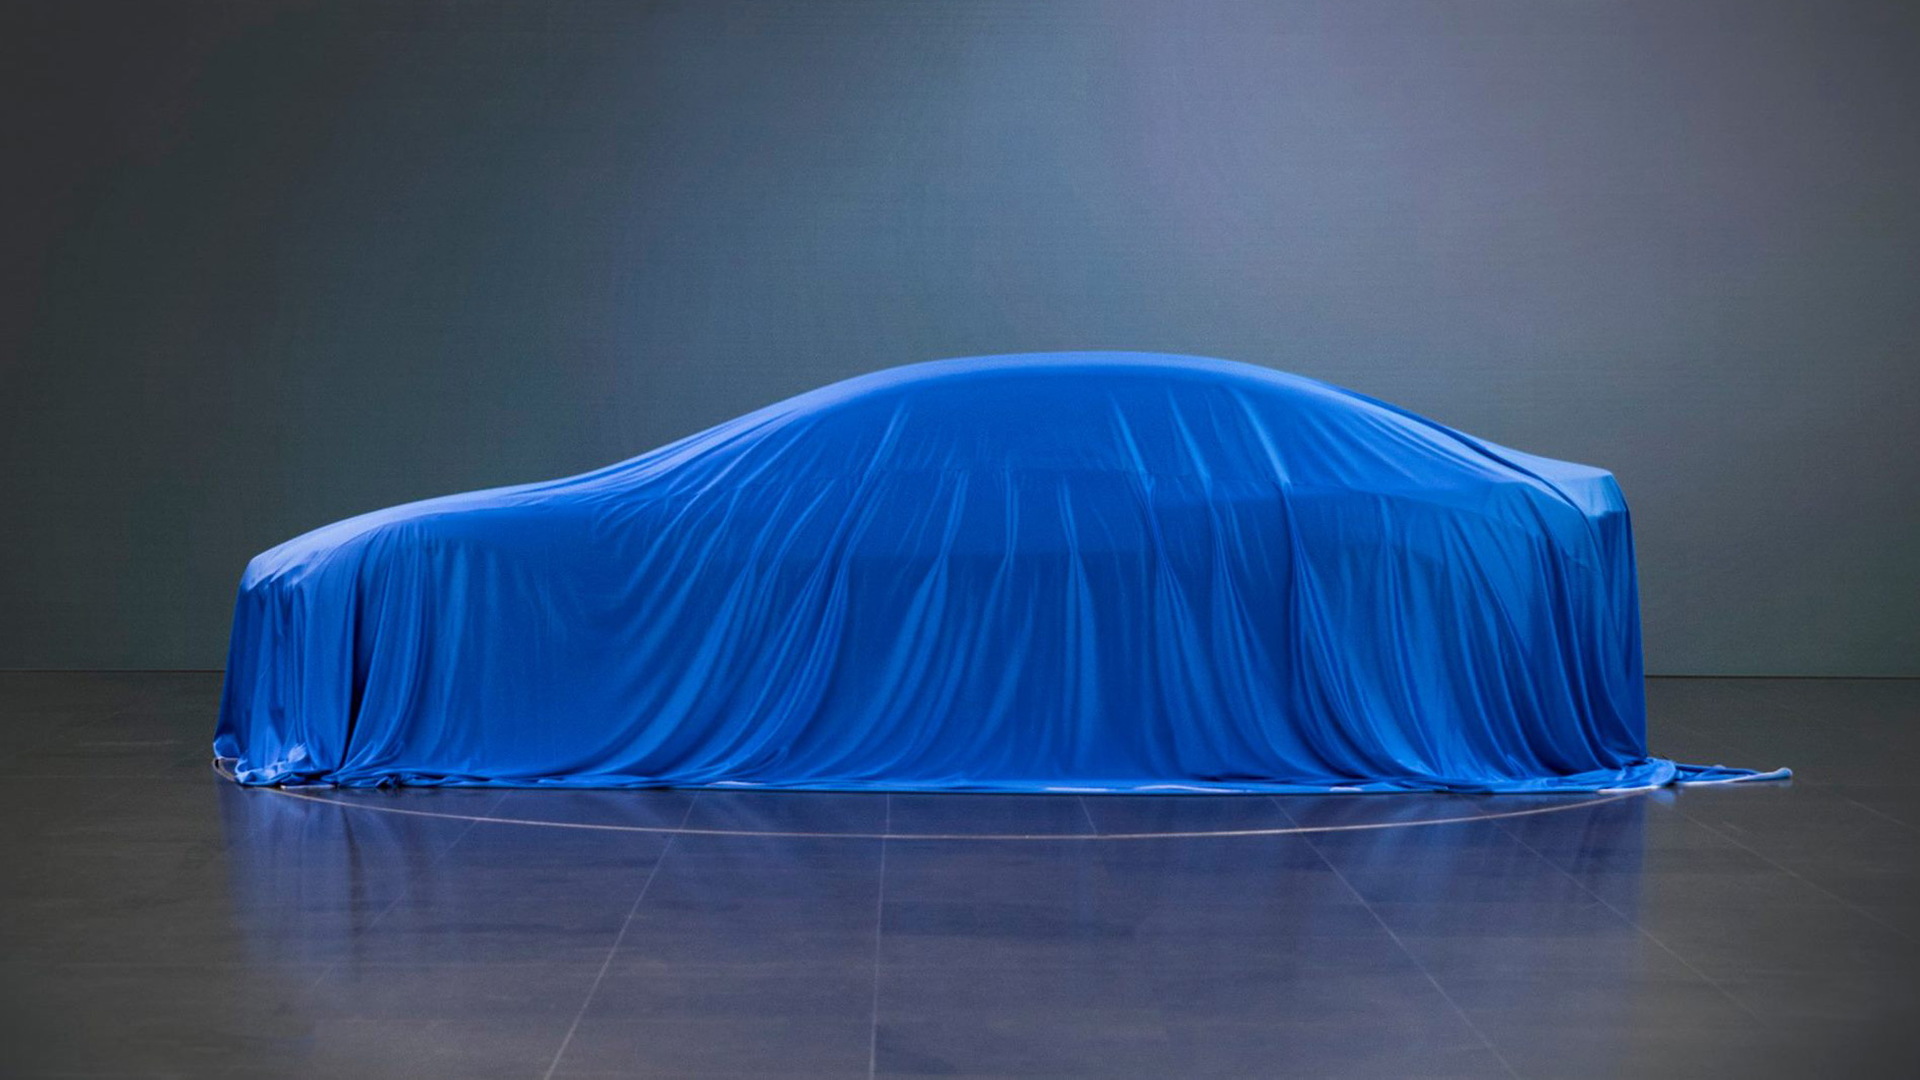 Teaser for BMW i concept debuting at 2017 Frankfurt auto show